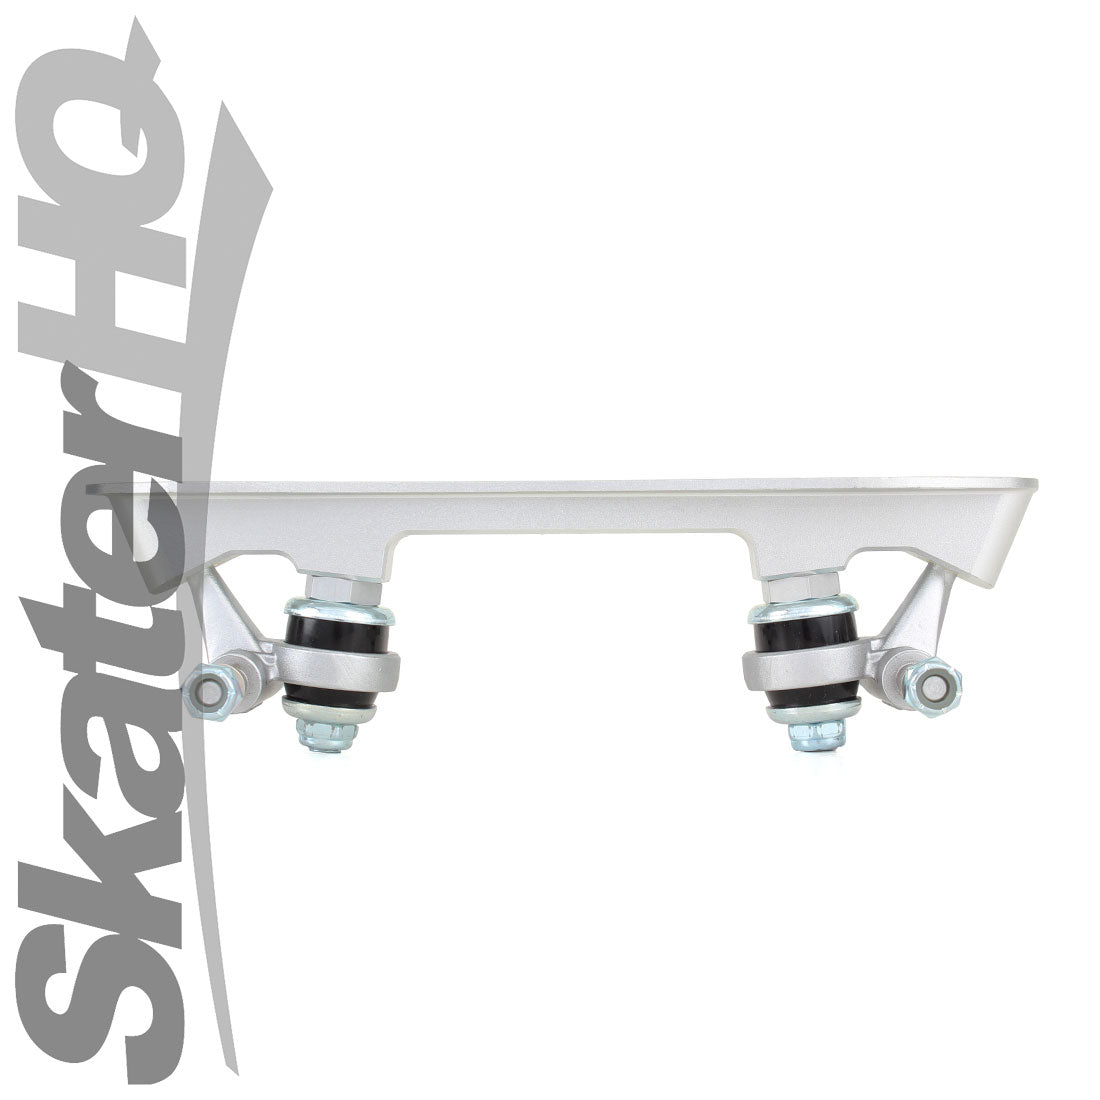 BONT Tracer Speed Plates 6.0 - Silver Roller Skate Plates